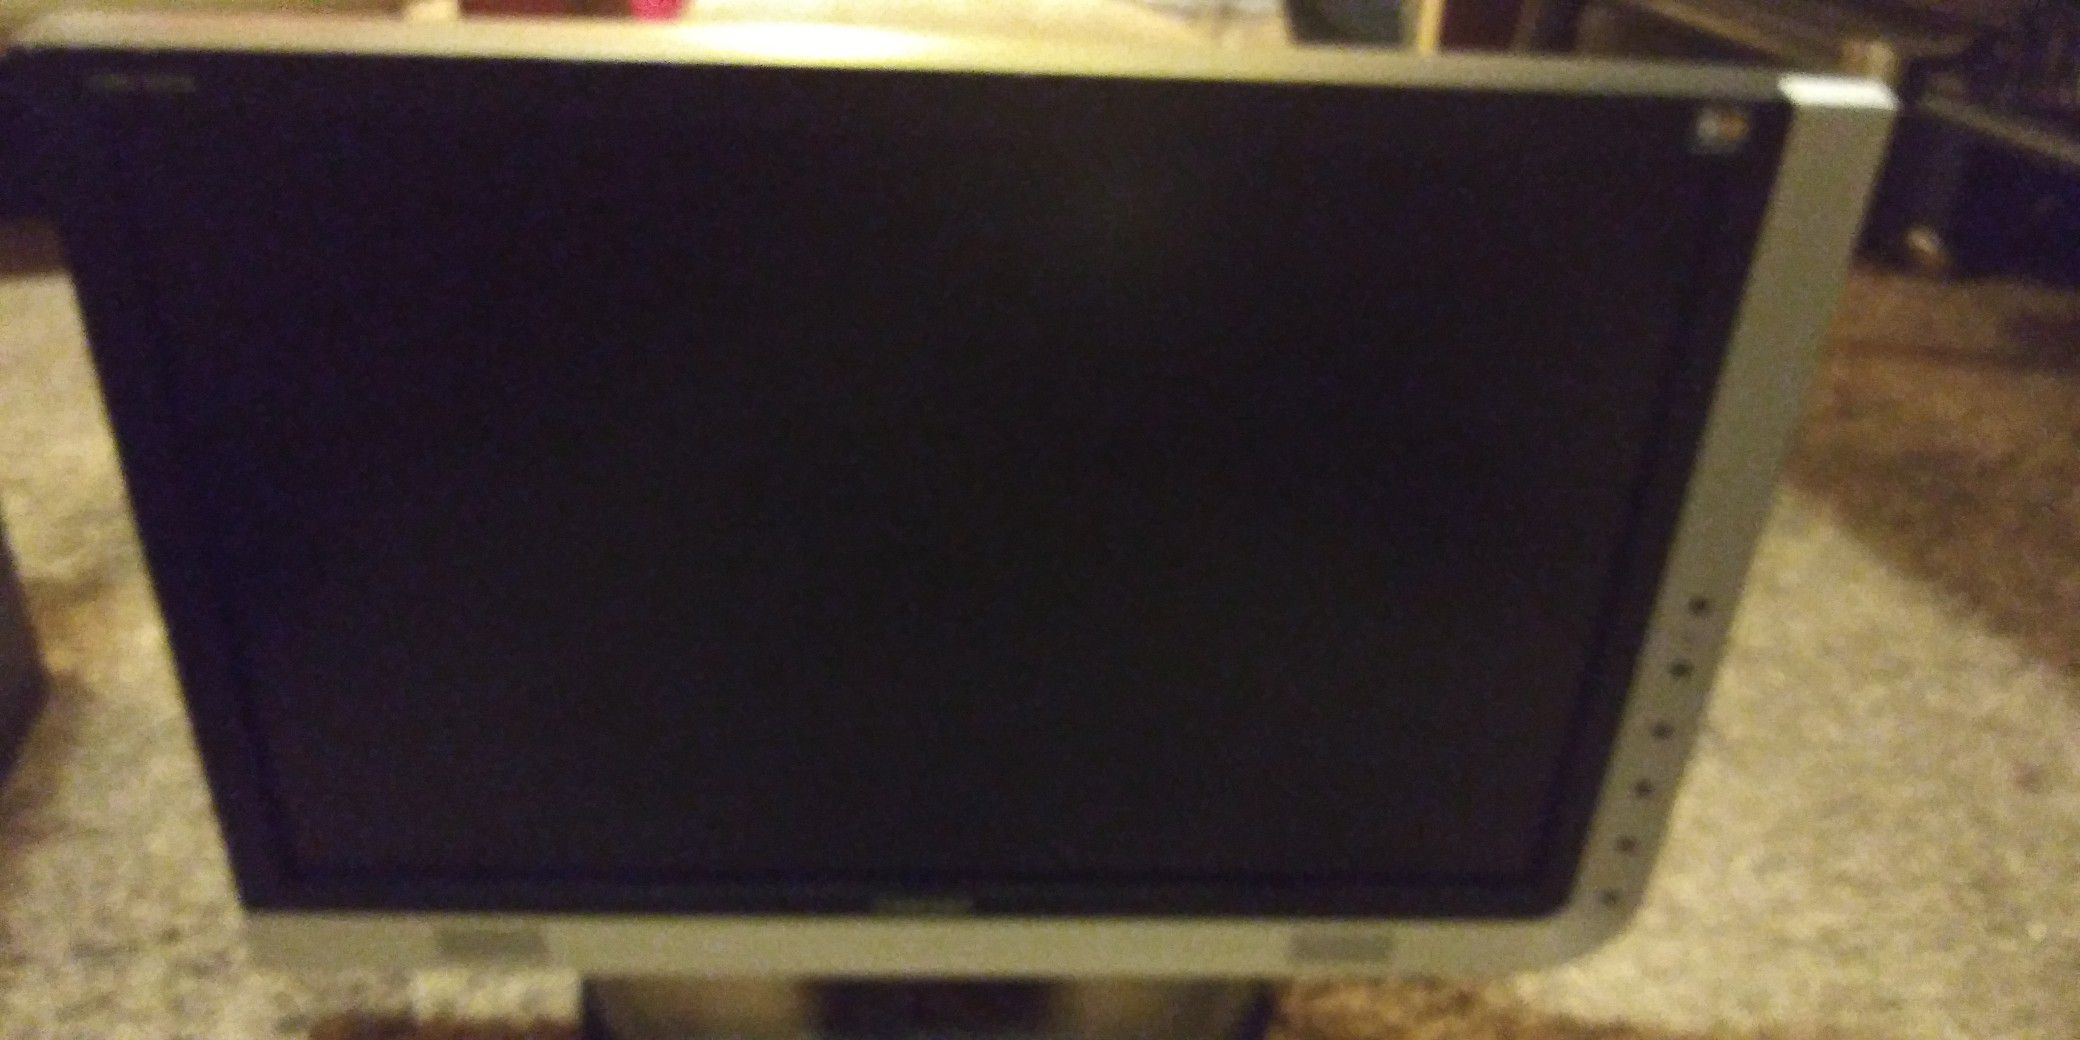 Computer monitor an tv